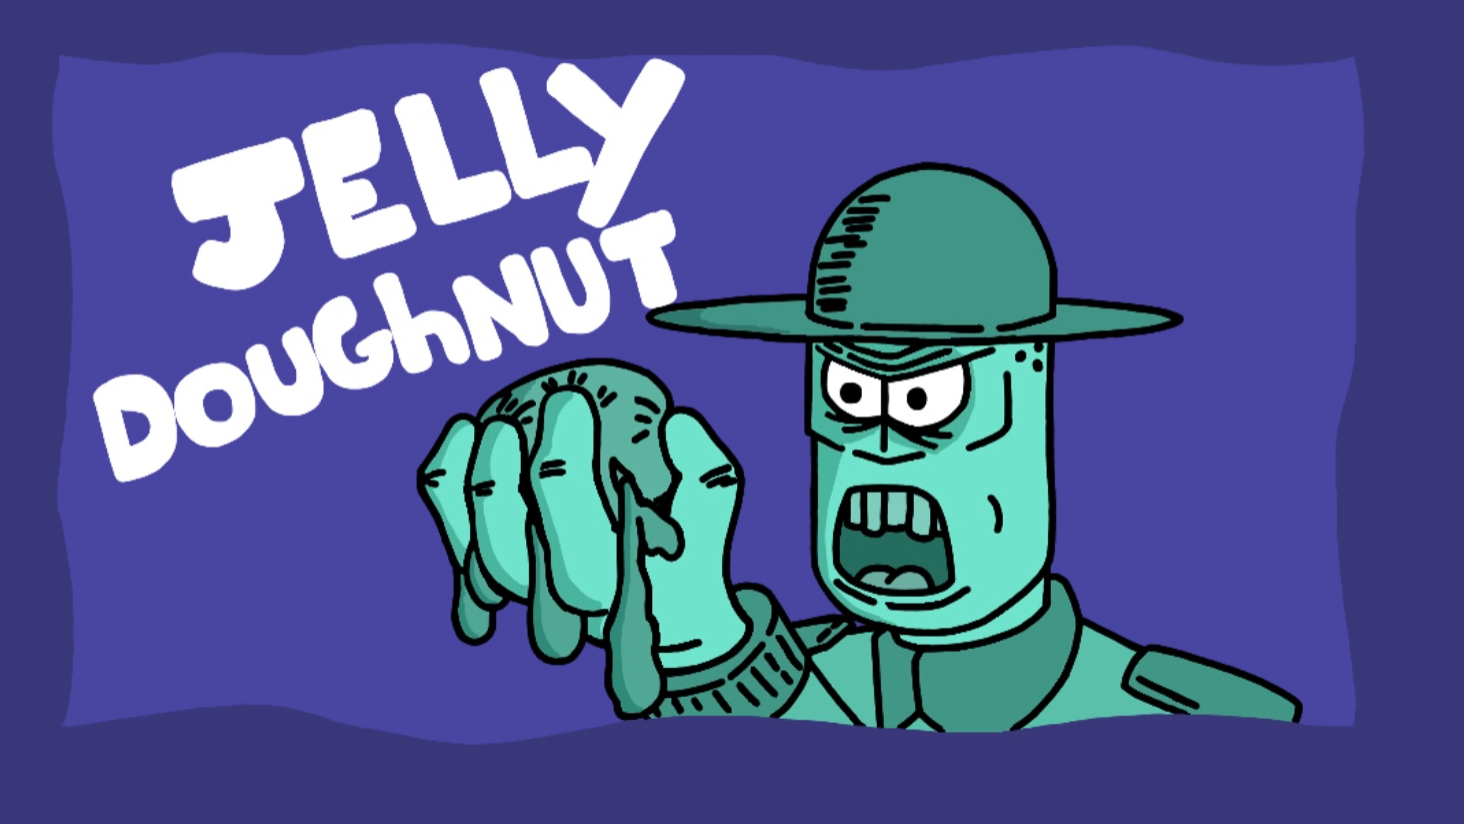 Jelly doughnuts